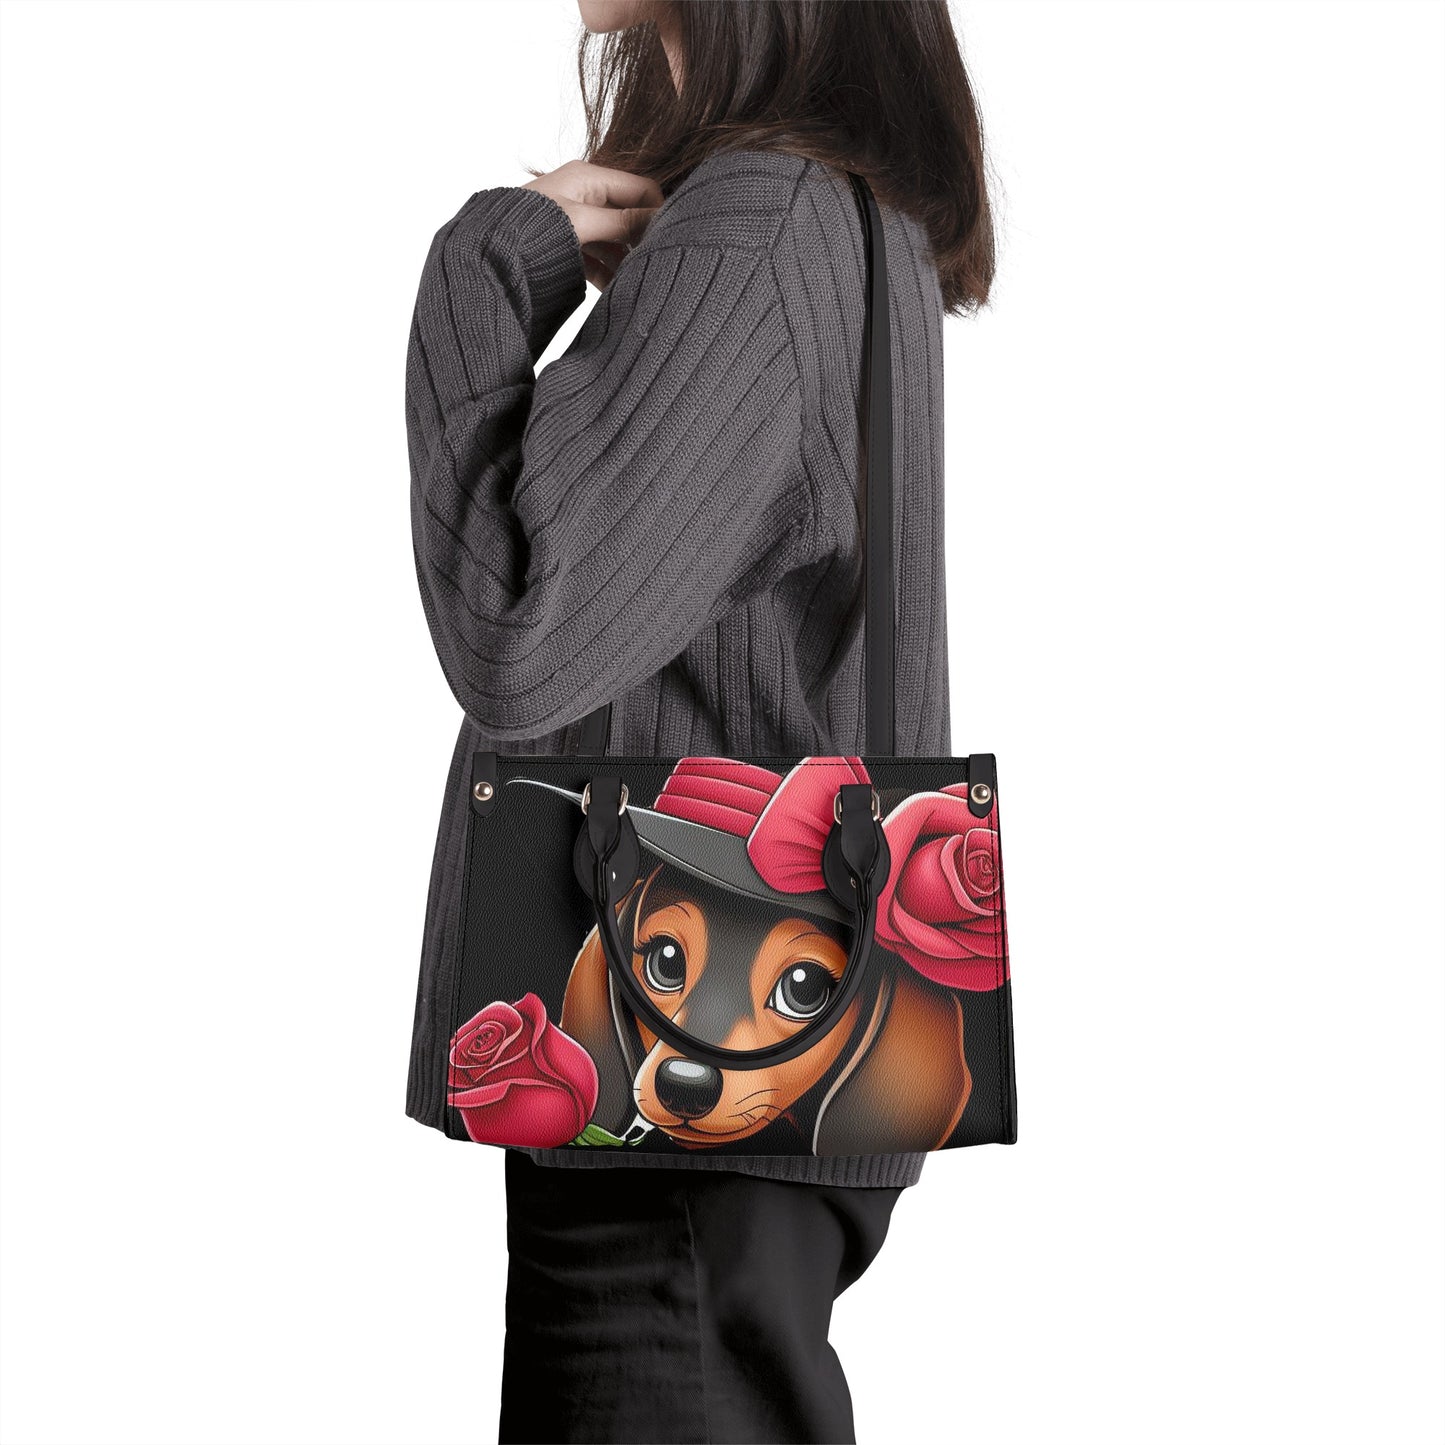 Cleo - Luxury Women Handbag